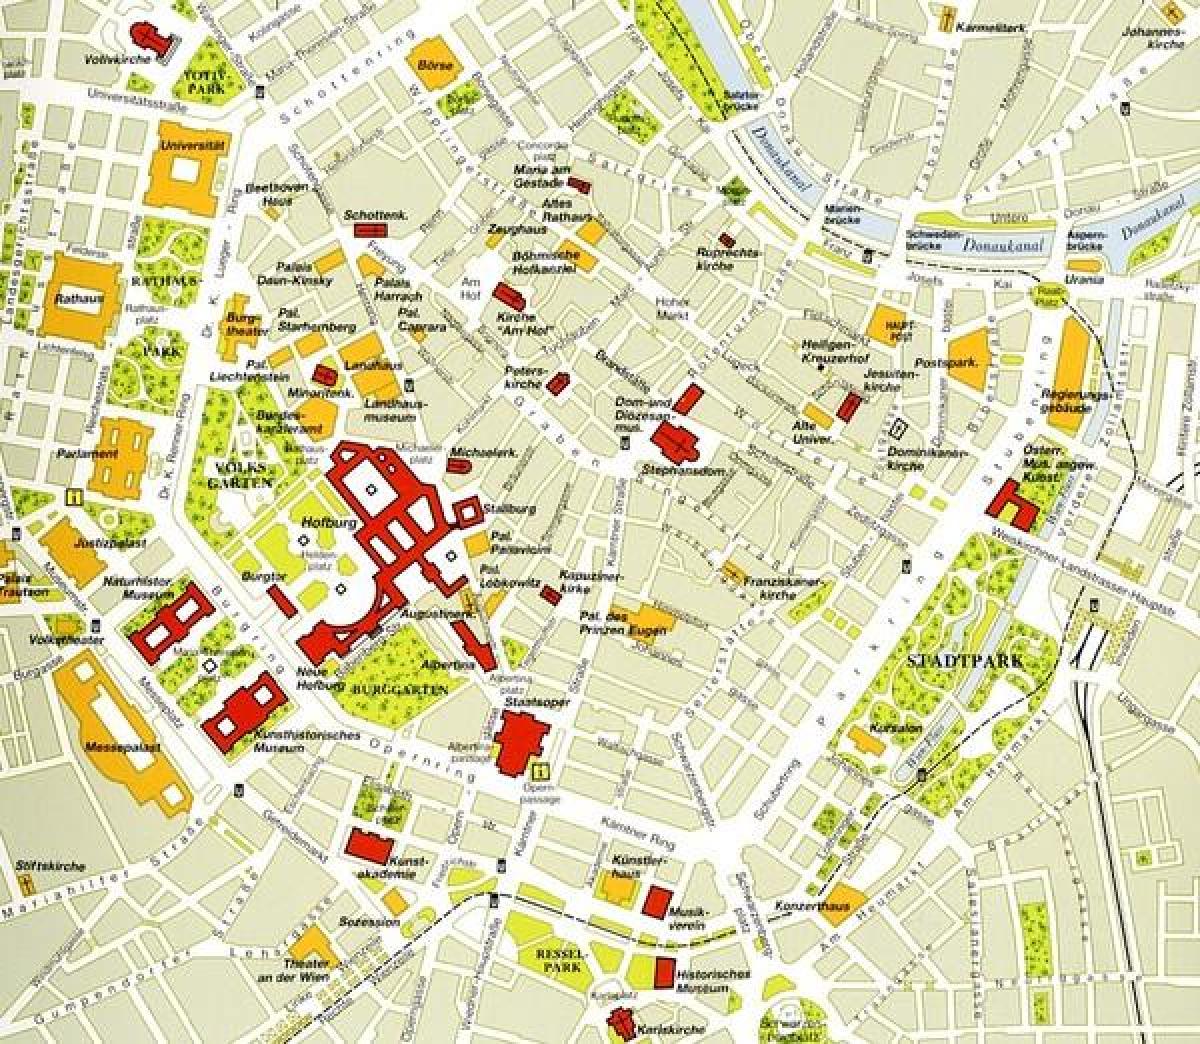 Viena centre històric mapa